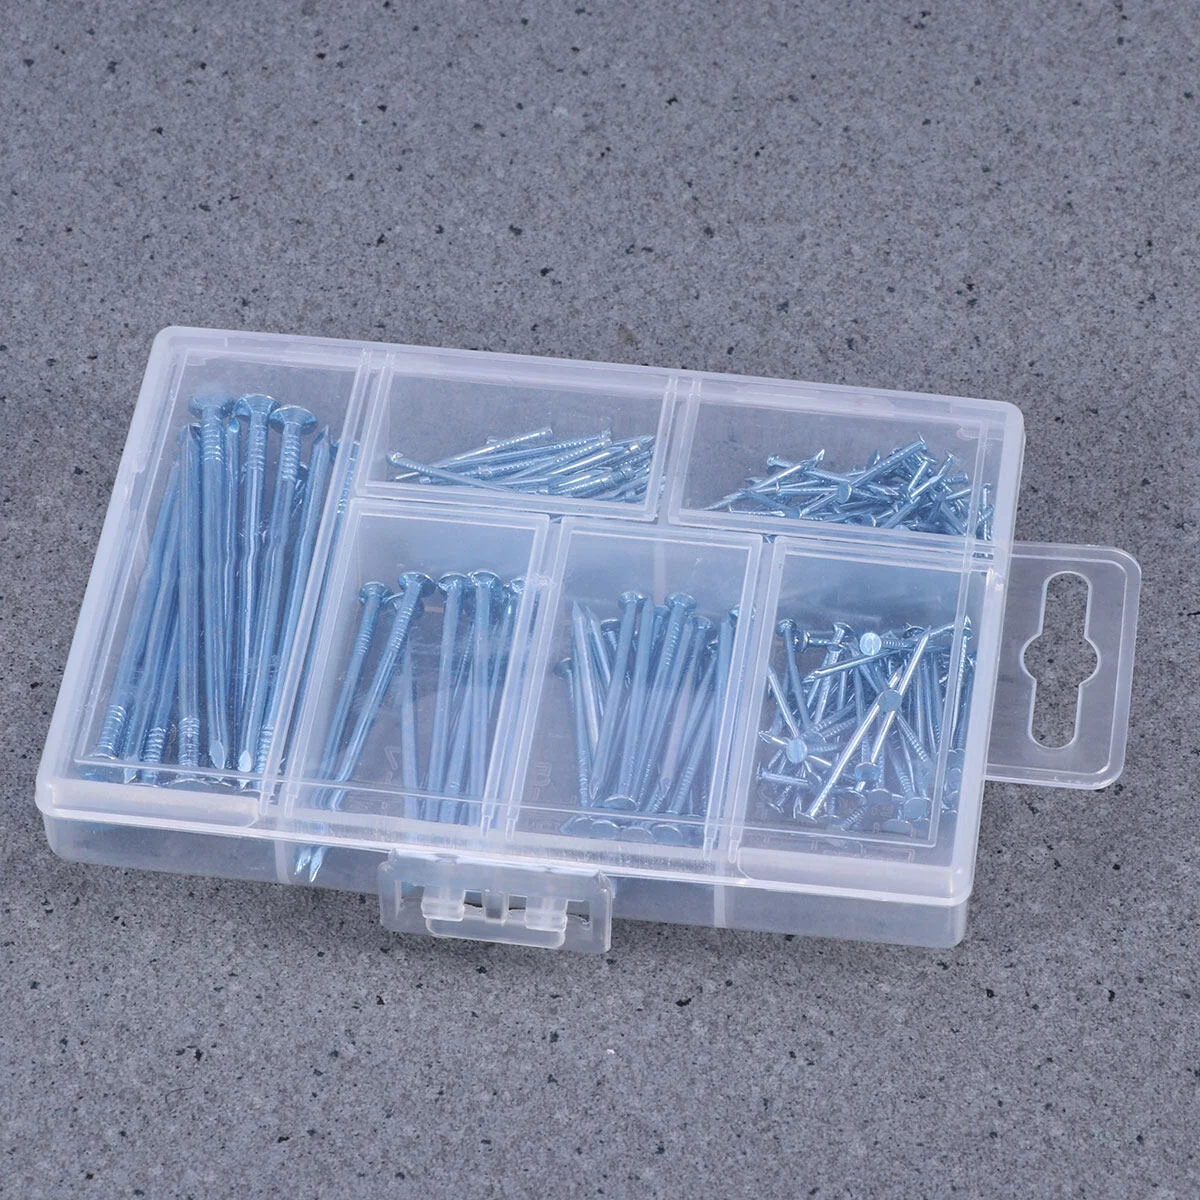 240 PCS Assortment Nails Brad Nails Round Nail Set Kit (Silver)